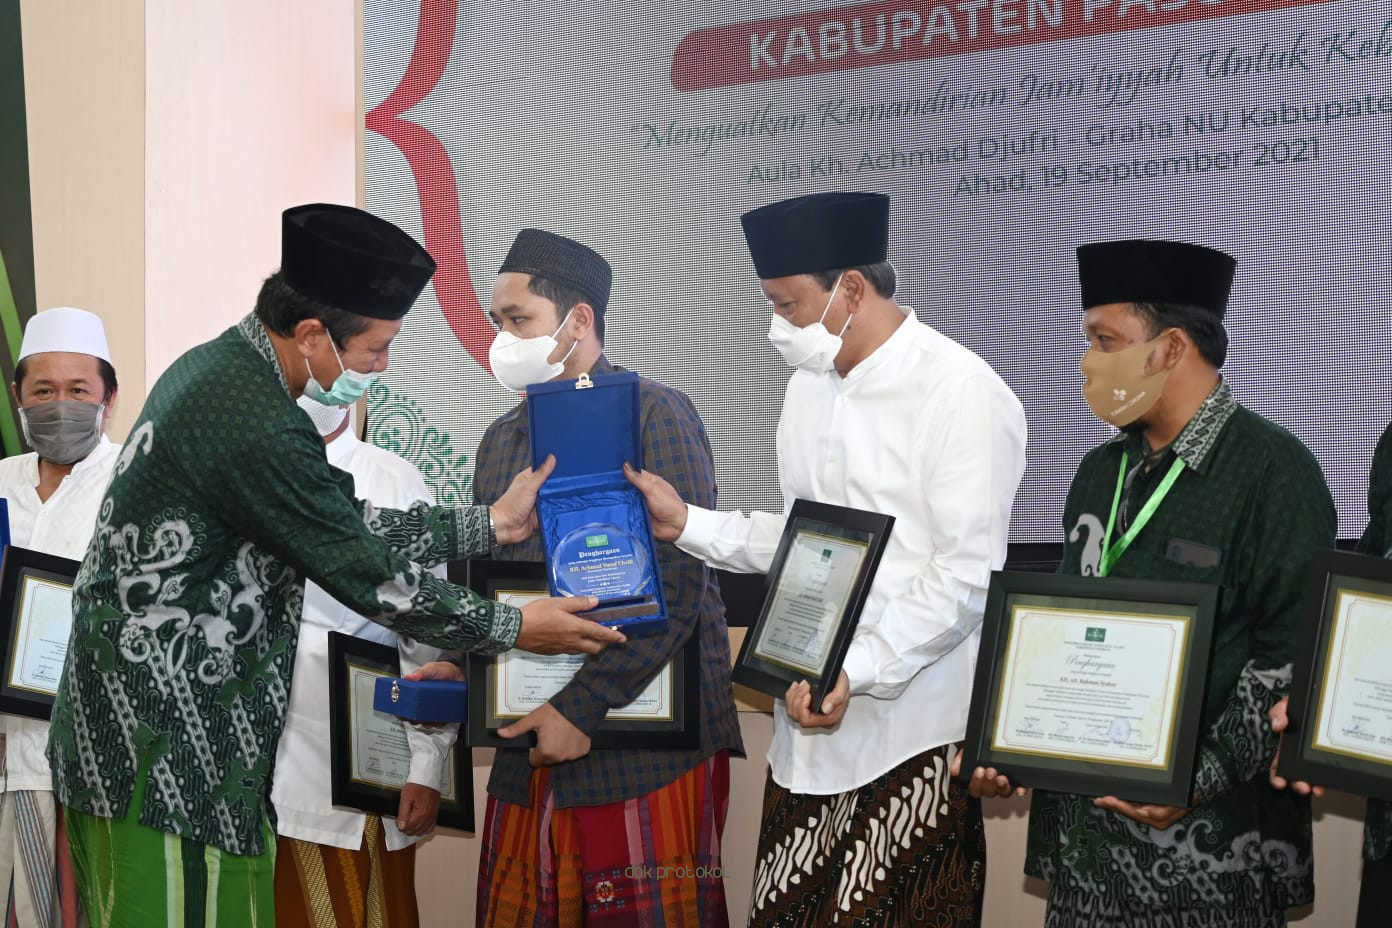 KH Imron Mutamakkin dan KH Muzakki Birrul Alim Kembali Terpilih Sebagai Ketua Tanfidziyah dan Rois Syuriah PCNU Kabupaten Pasuruan 2021-2026